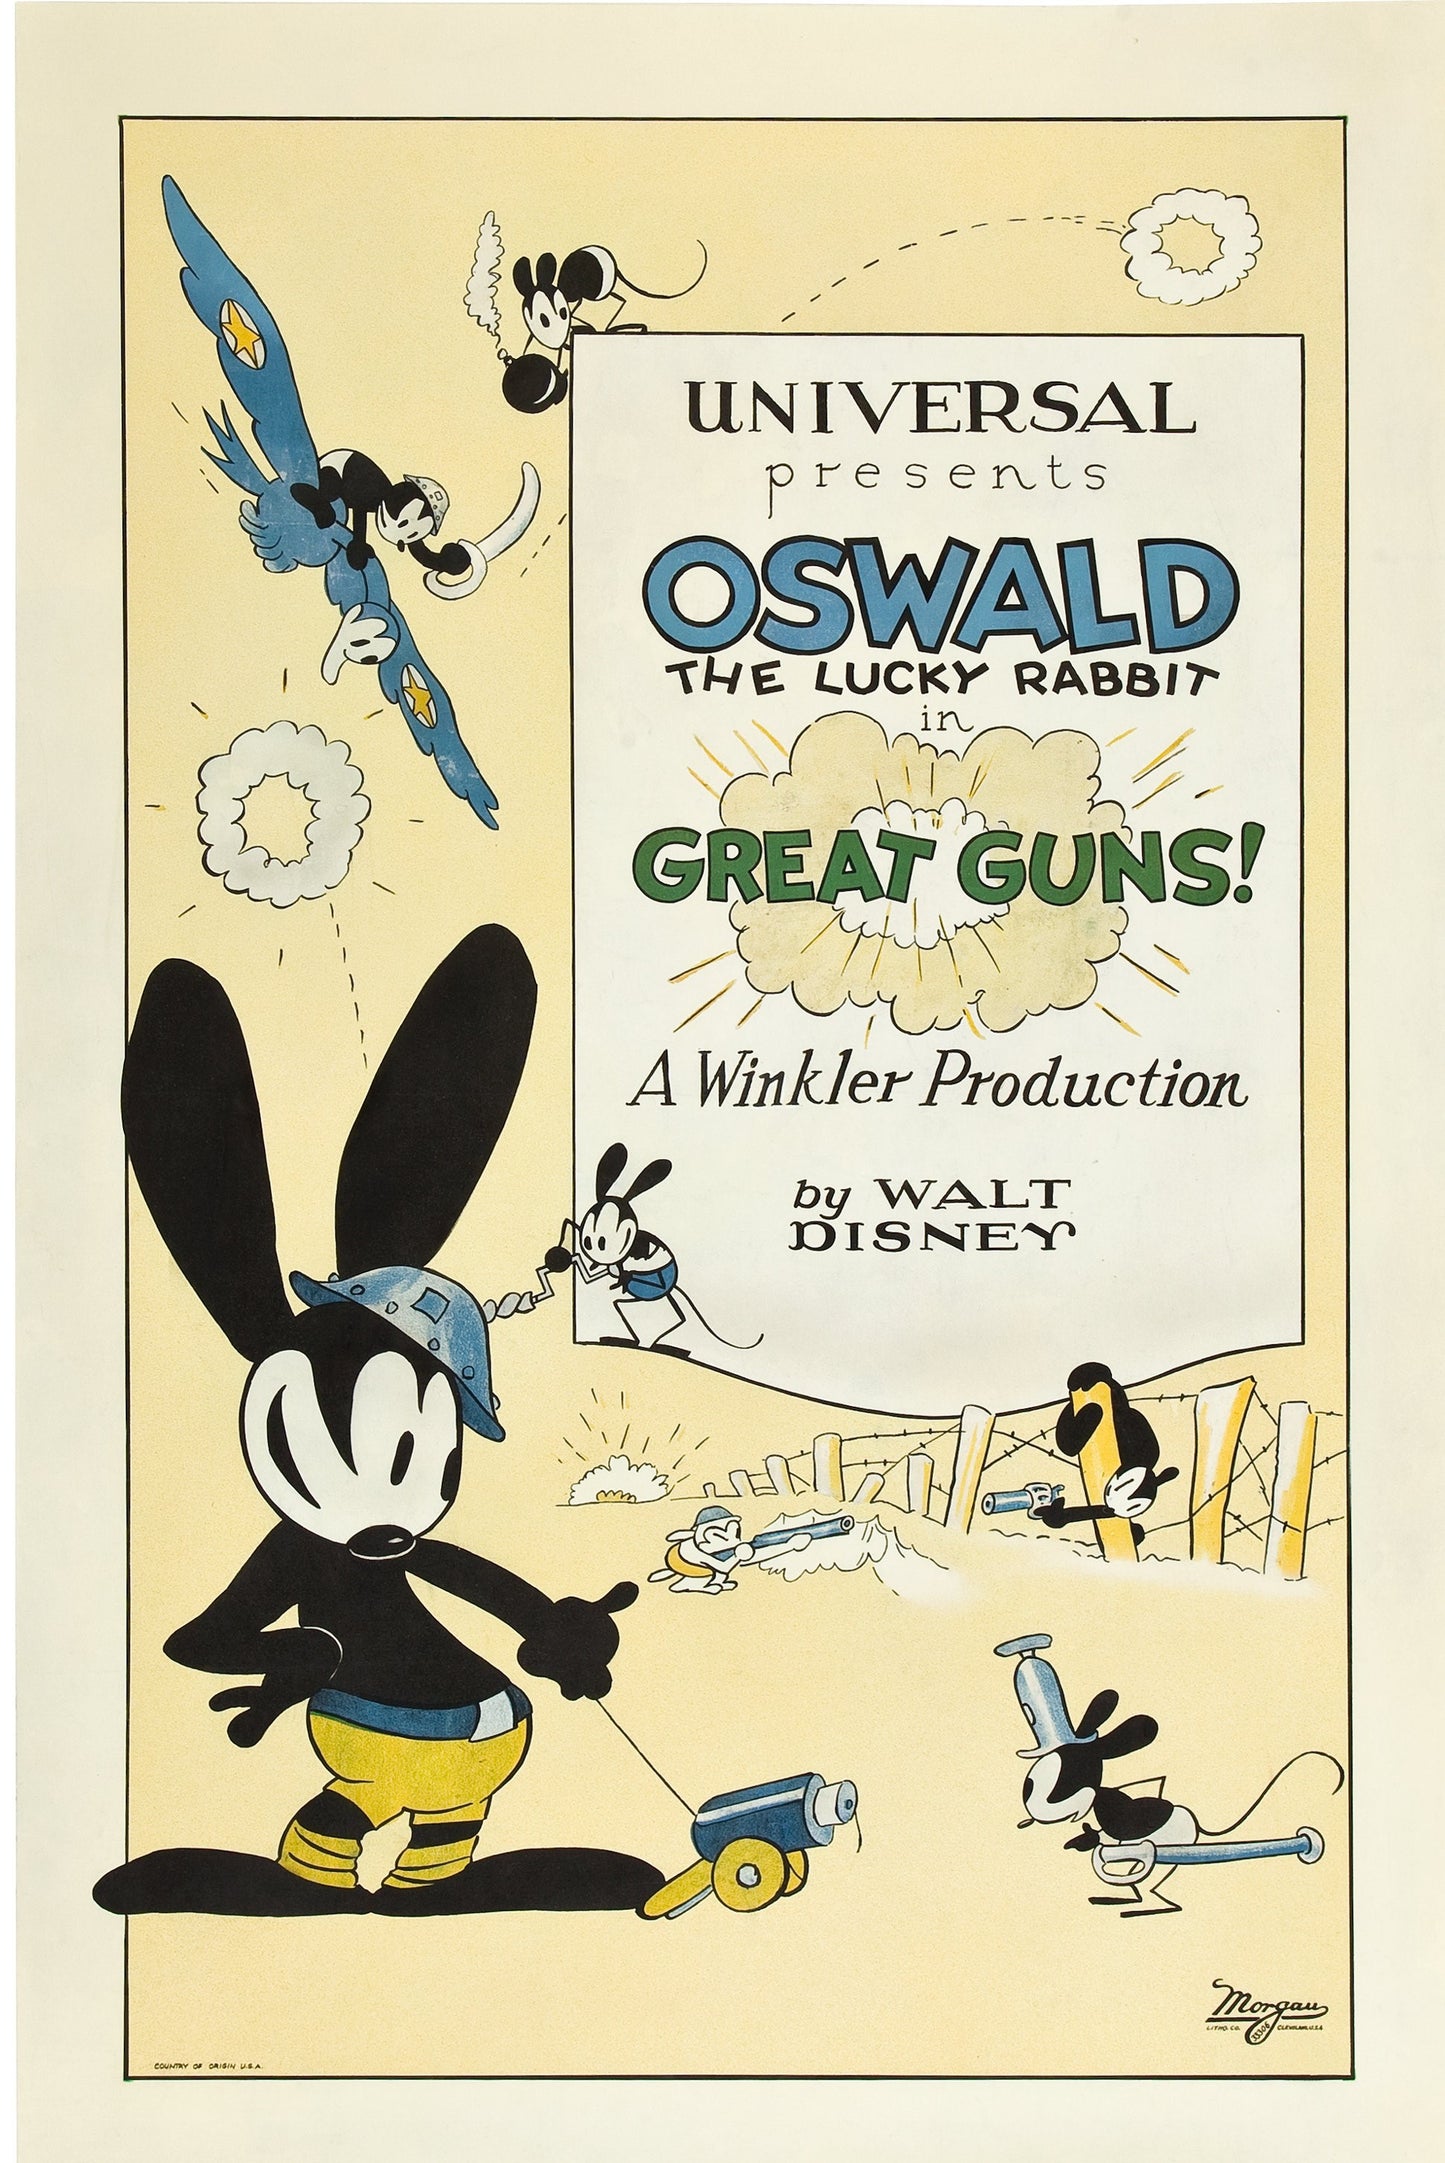 Disney's Oswald the lucky rabbit poster artwork (1920s) Posters, Prints, & Visual Artwork The Trumpet Shop Vintage Prints   